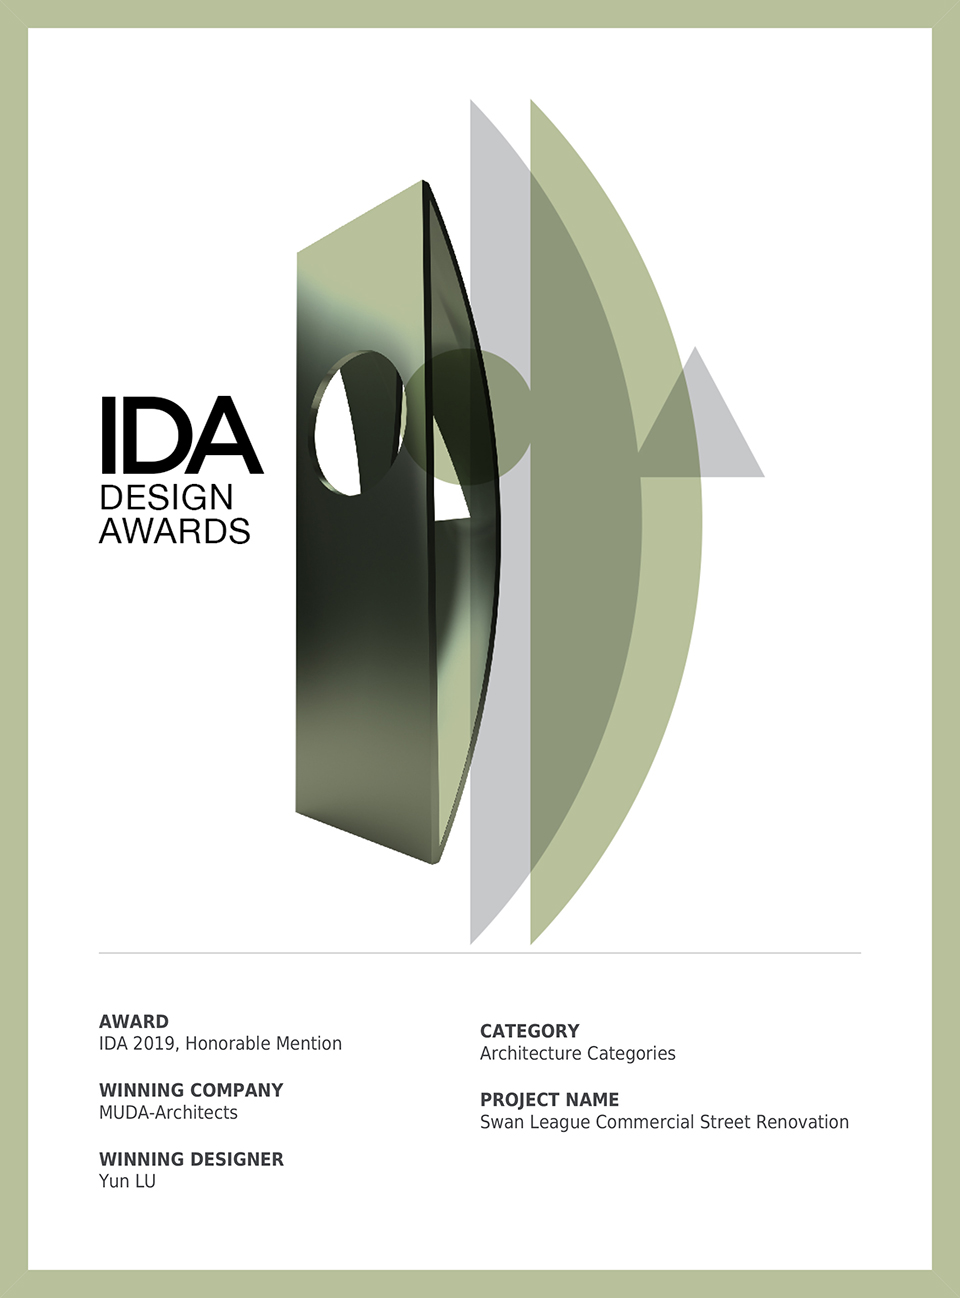 MUDA won the 2019 International Design Awards